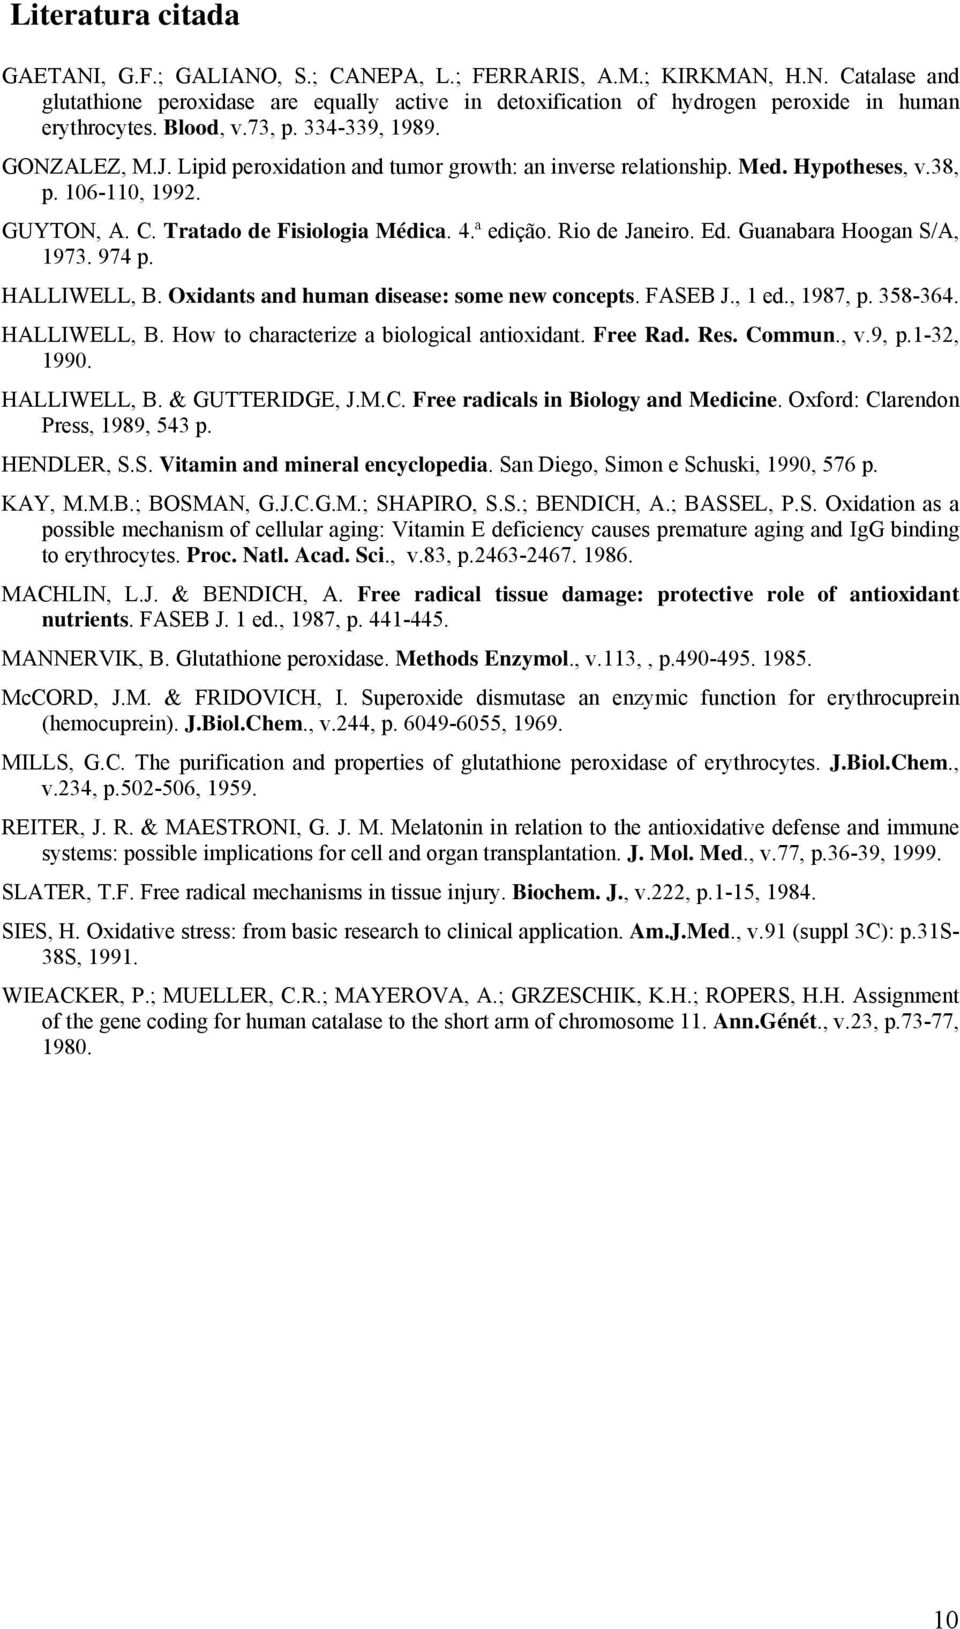 ª edição. Rio de Janeiro. Ed. Guanabara Hoogan S/A, 1973. 974 p. HALLIWELL, B. Oxidants and human disease: some new concepts. FASEB J., 1 ed., 1987, p. 358-364. HALLIWELL, B. How to characterize a biological antioxidant.